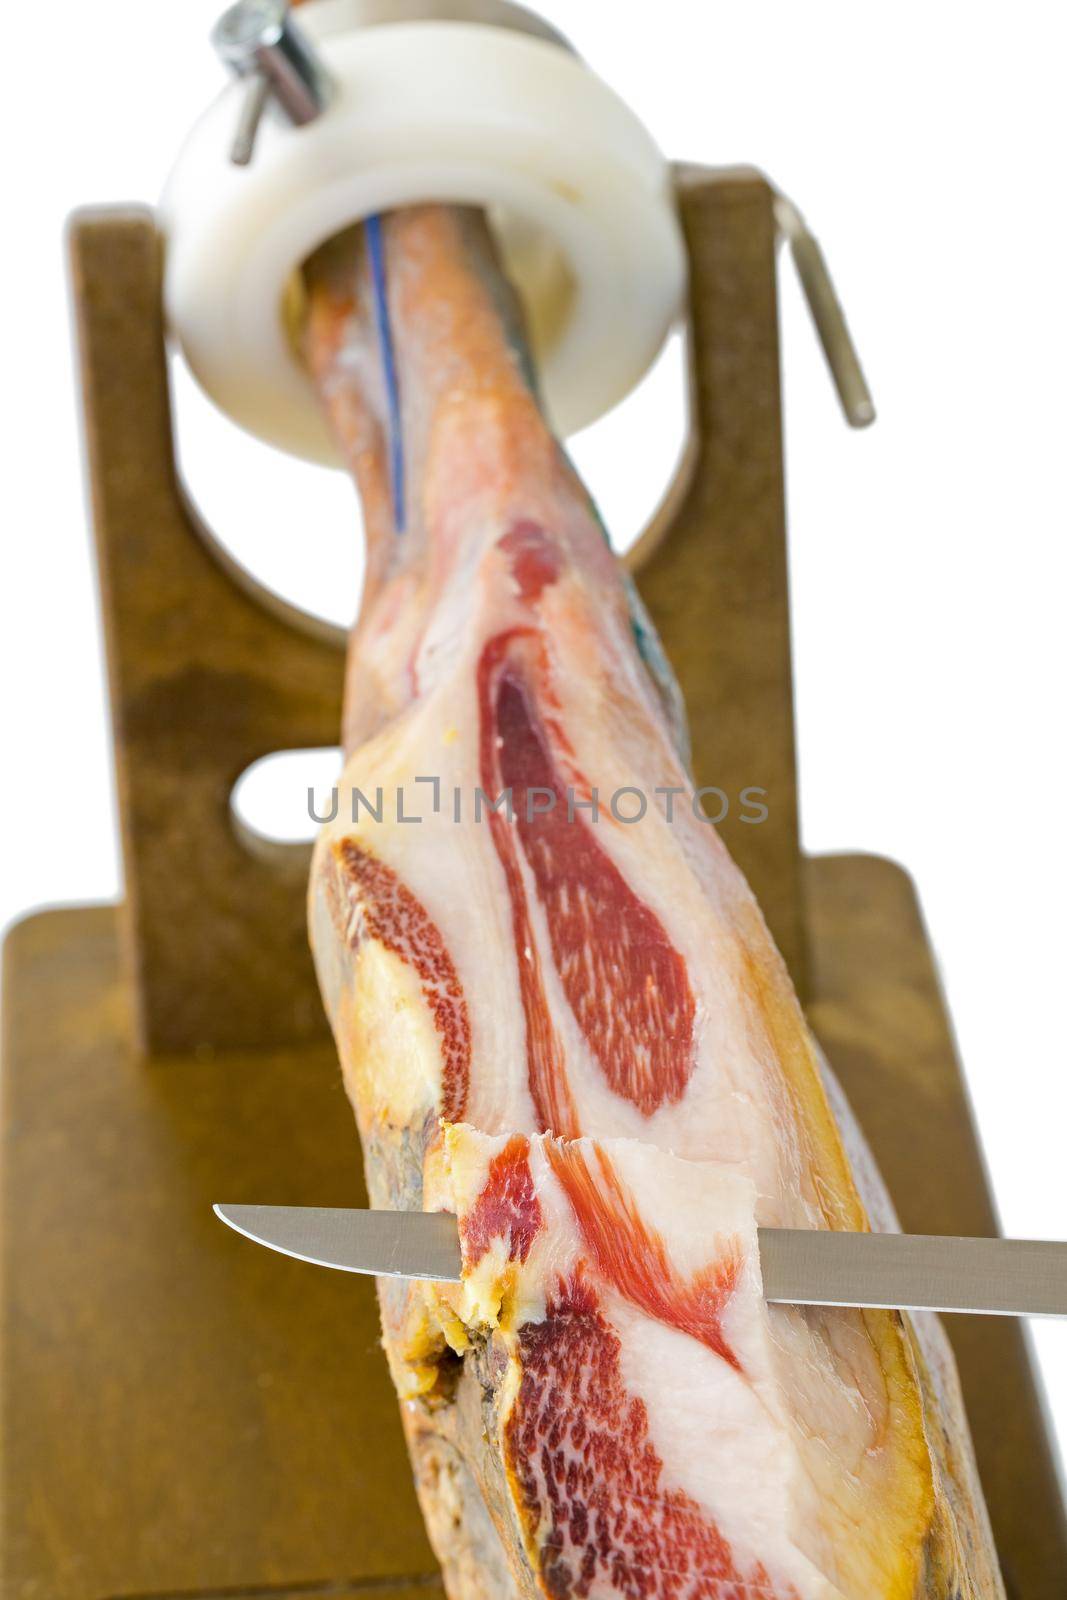 Cutting serrano ham slices